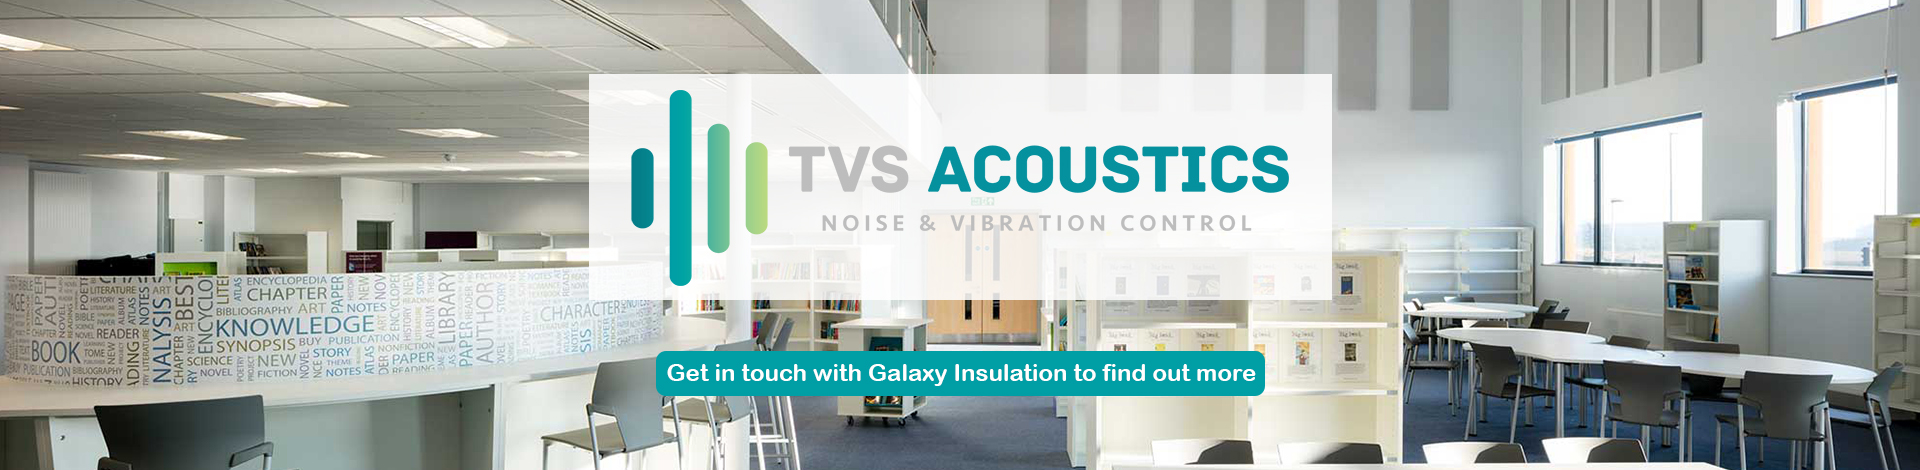 Banner TVS acoustics